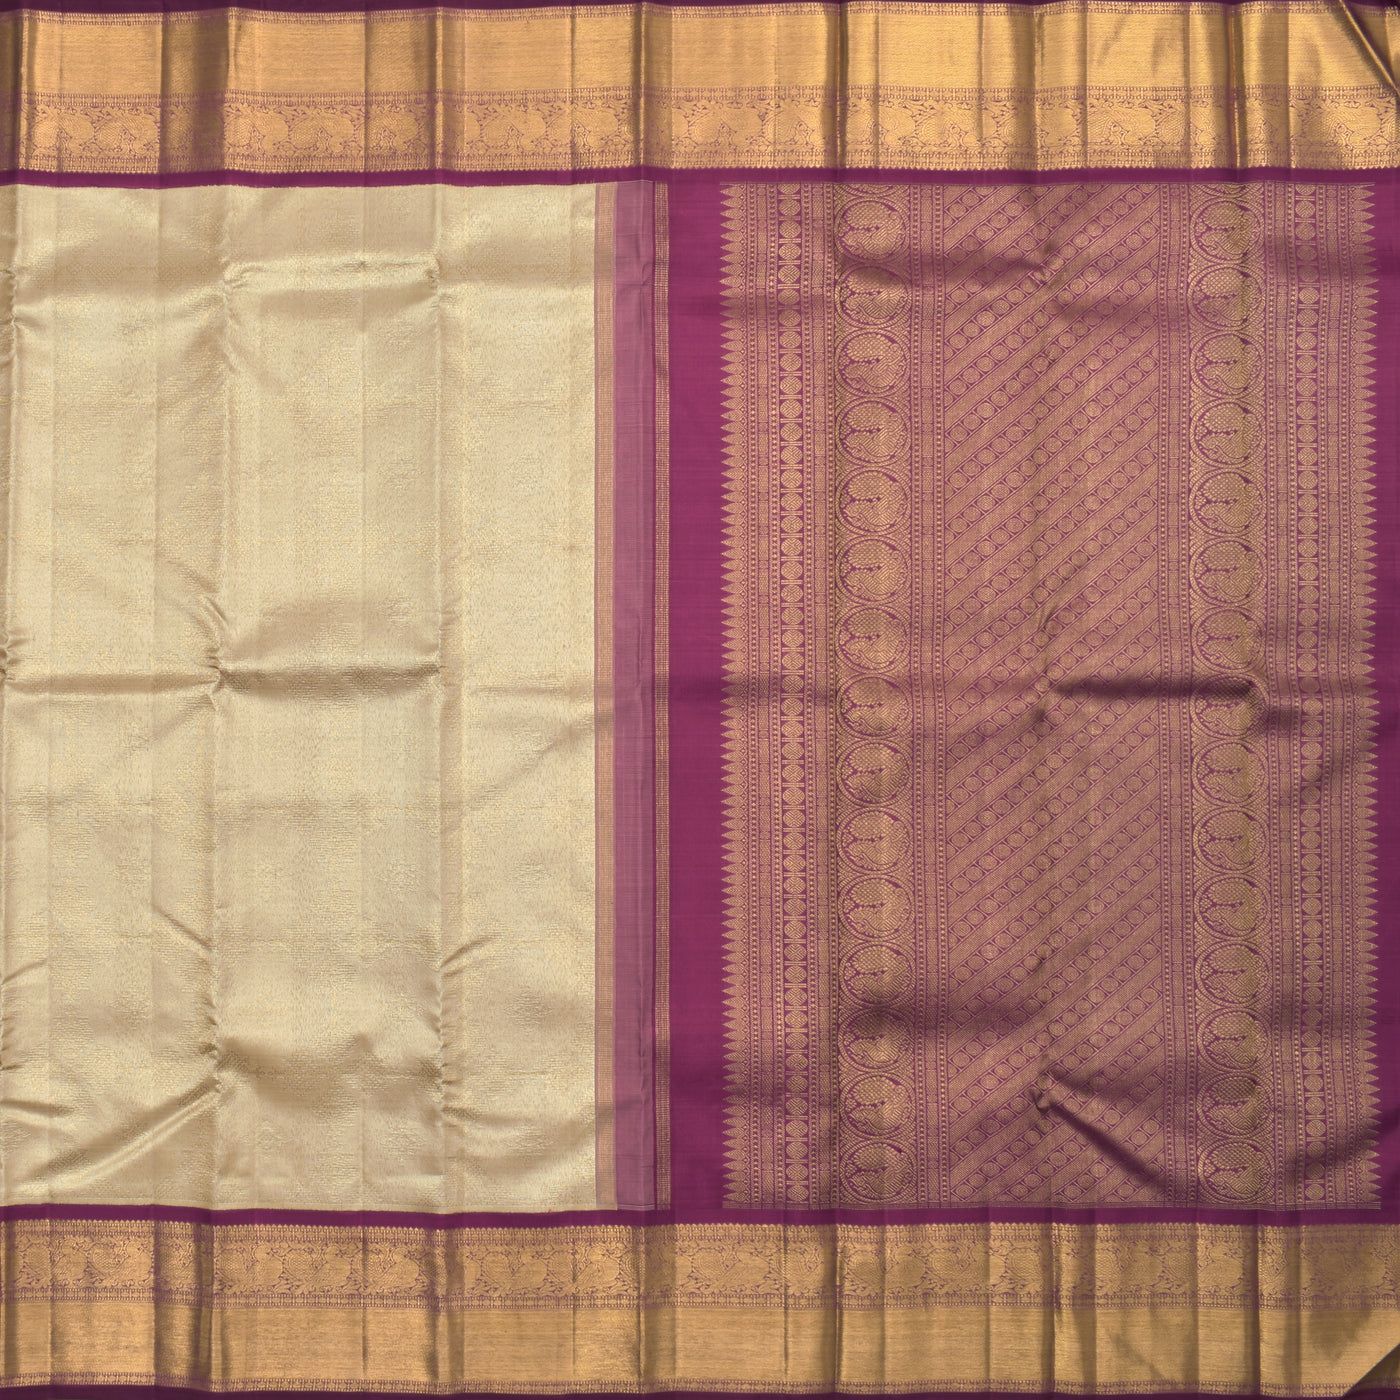 Off White Kanchipuram Silk Saree with Kolam Tissue Design